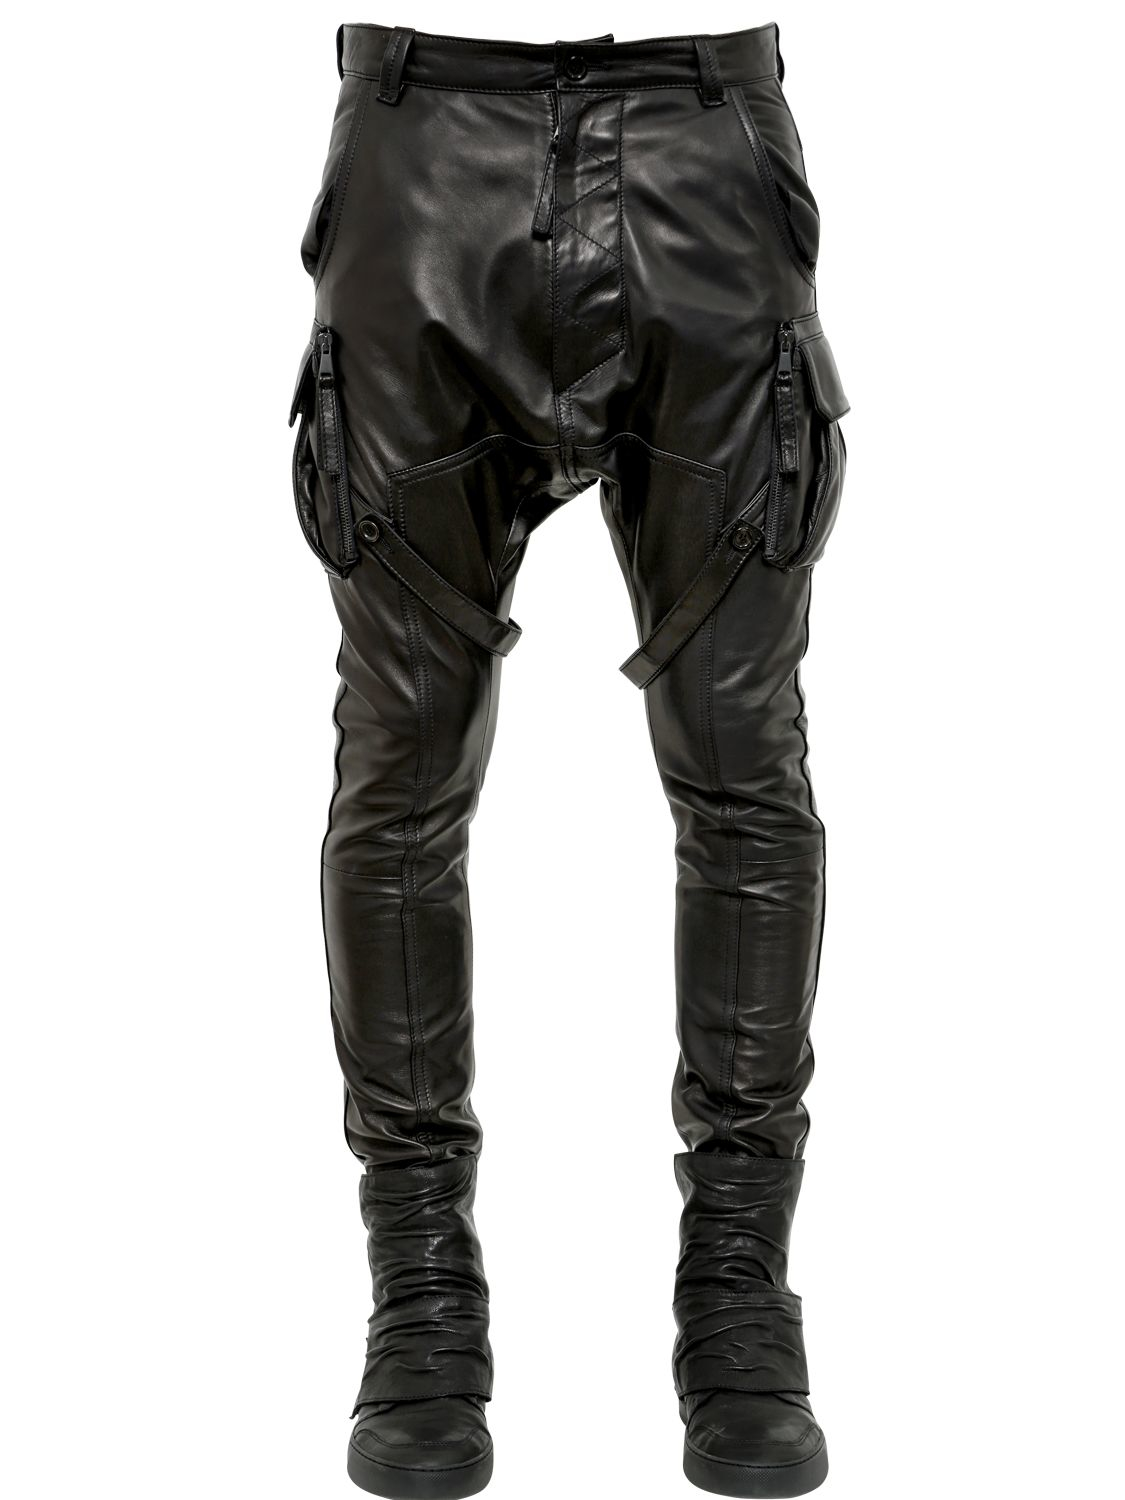 Alexandre Plokhov Nappa Leather Cargo Pants in Black for Men - Lyst